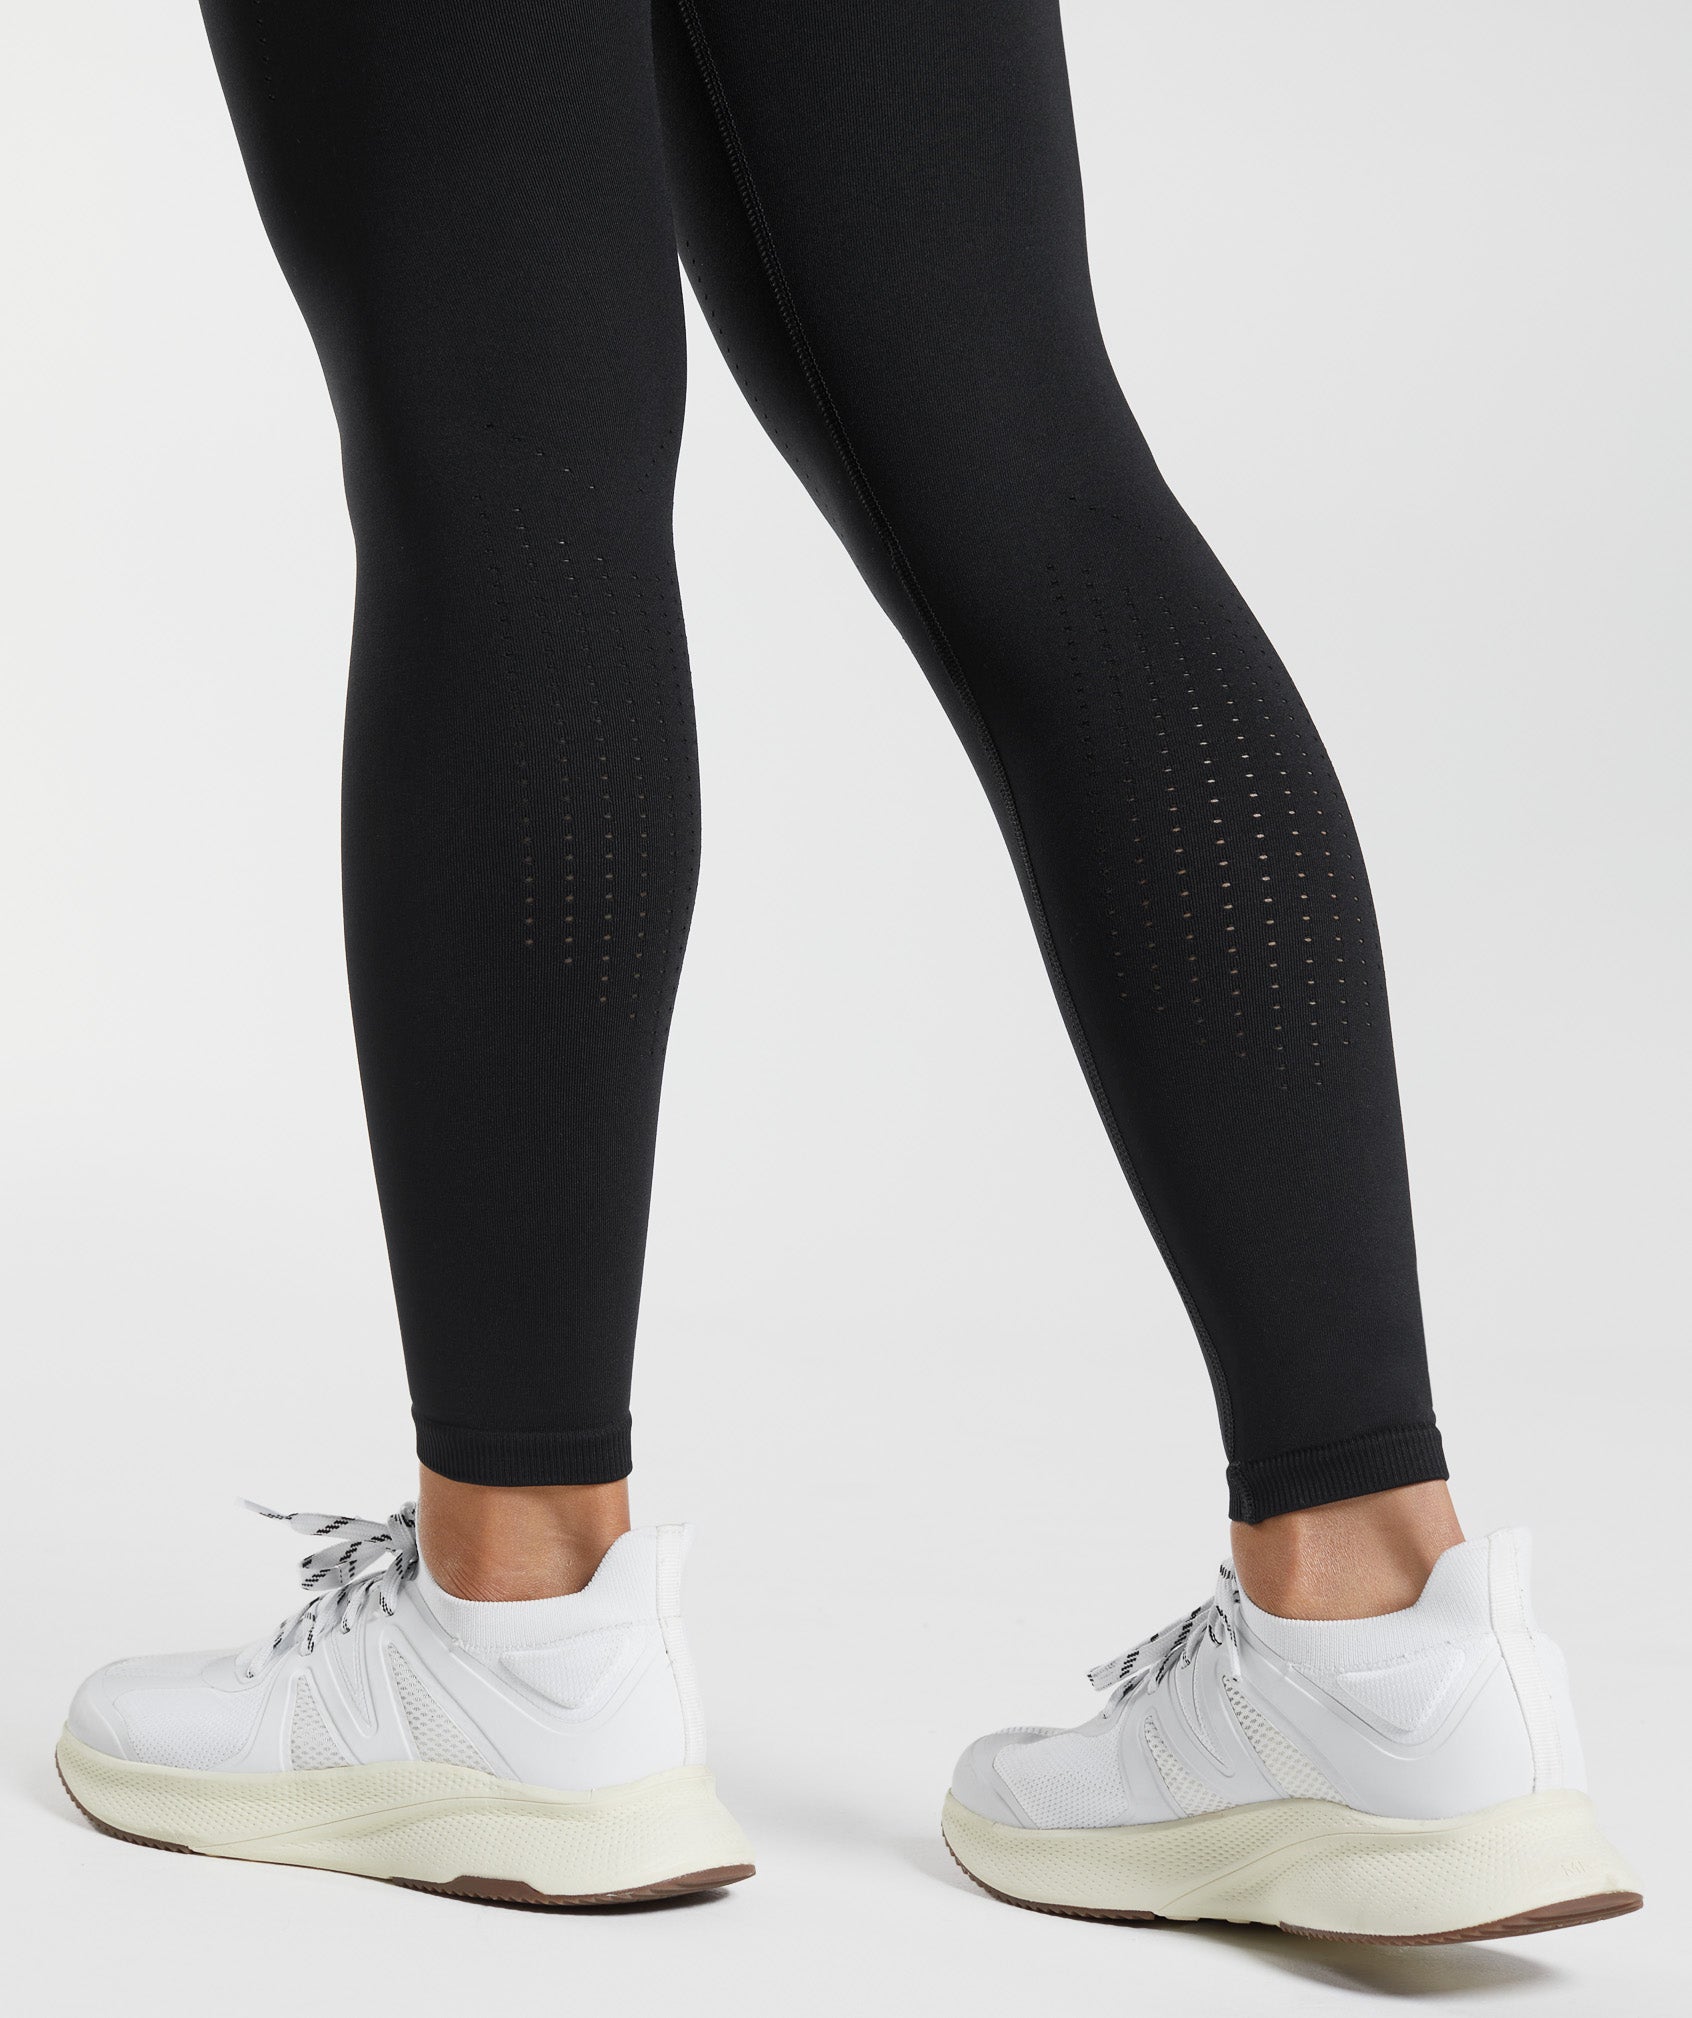 Gymshark Speed Leggings Black Size M - $40 (11% Off Retail) - From Sydney